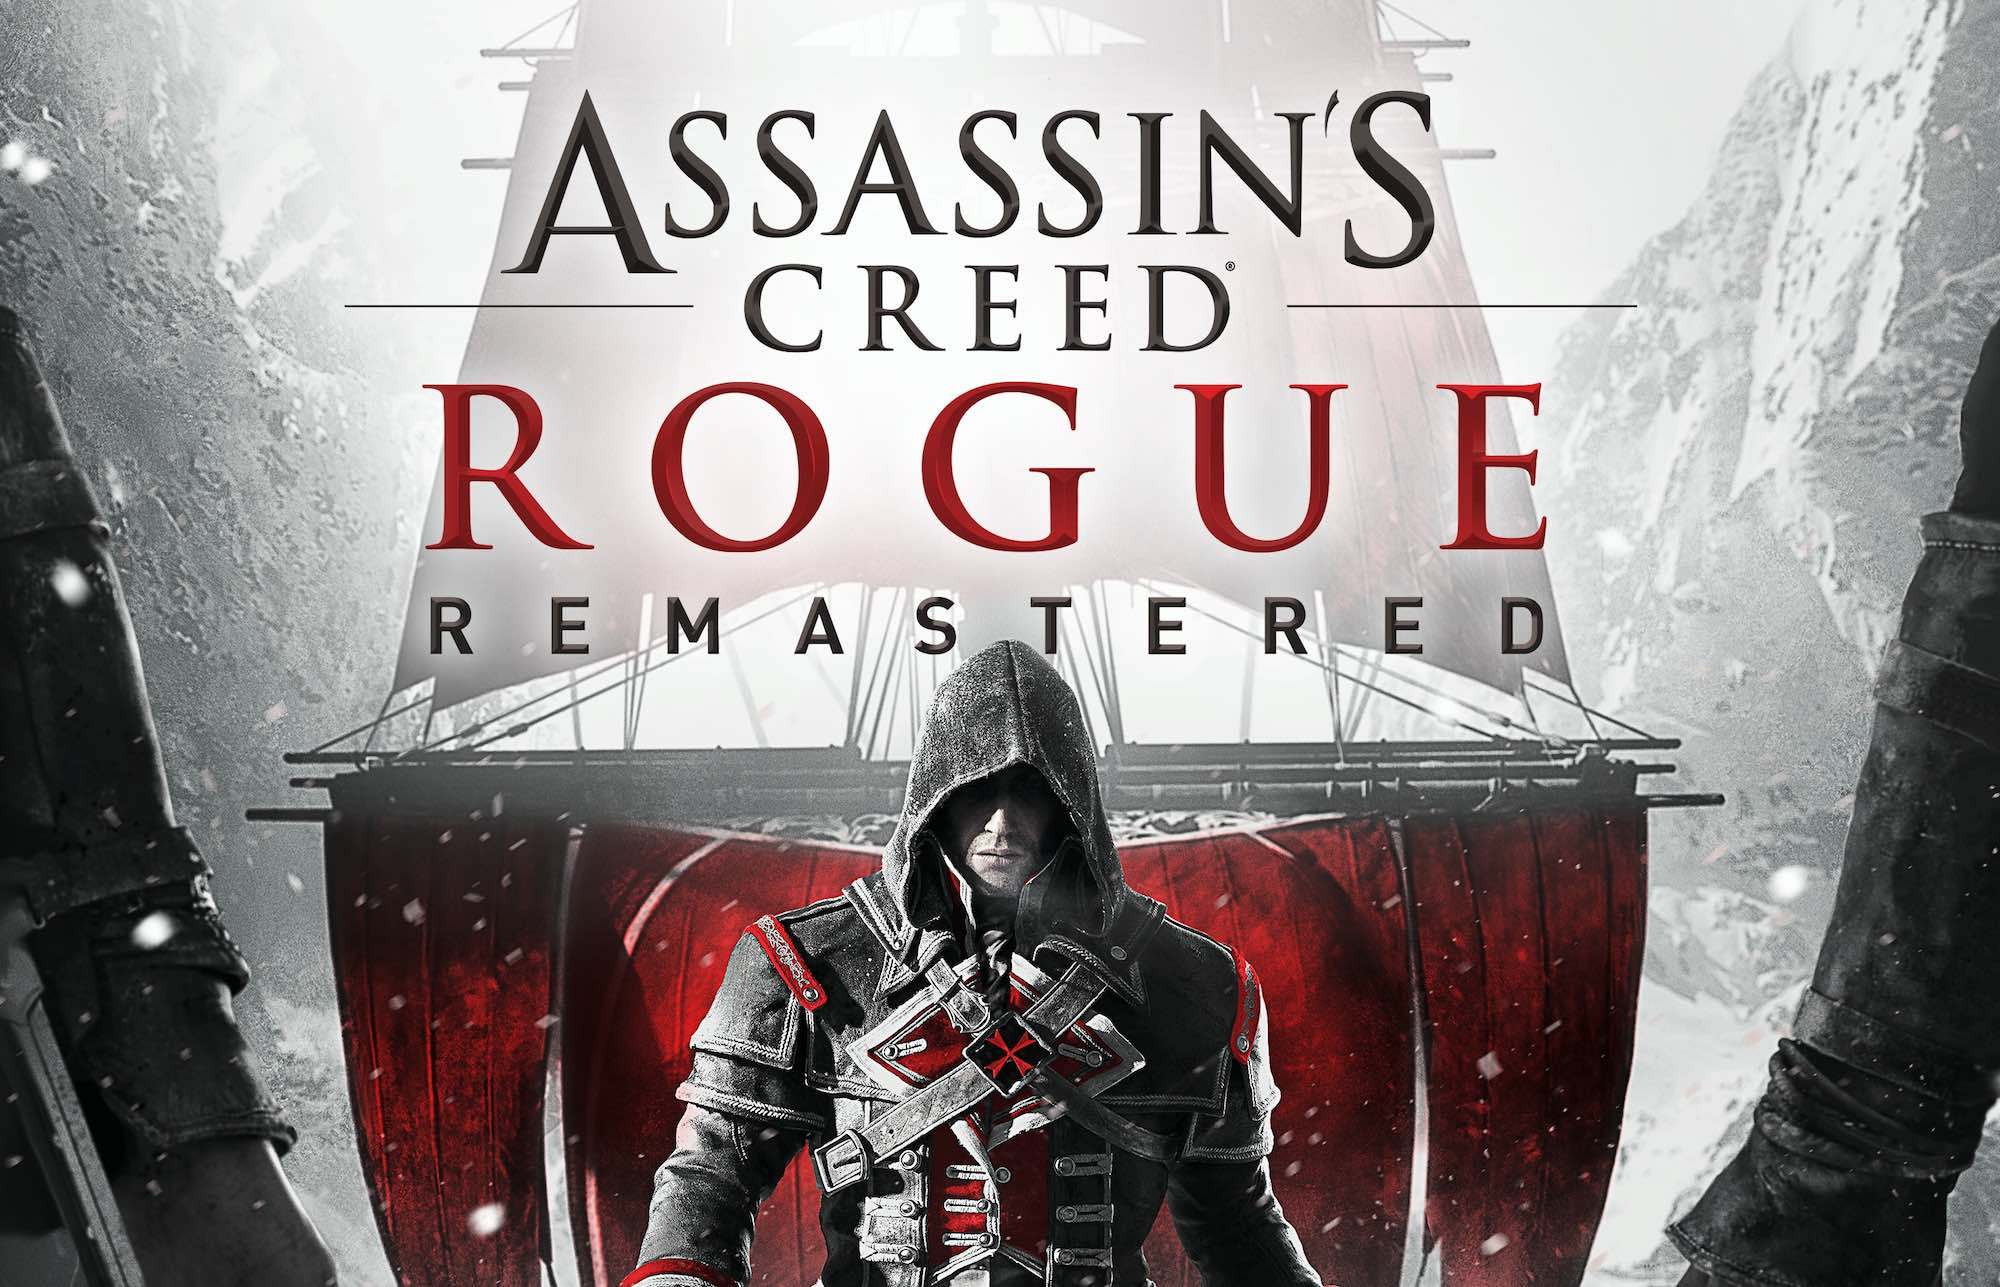 Assassins Creed rogue REMASTERED